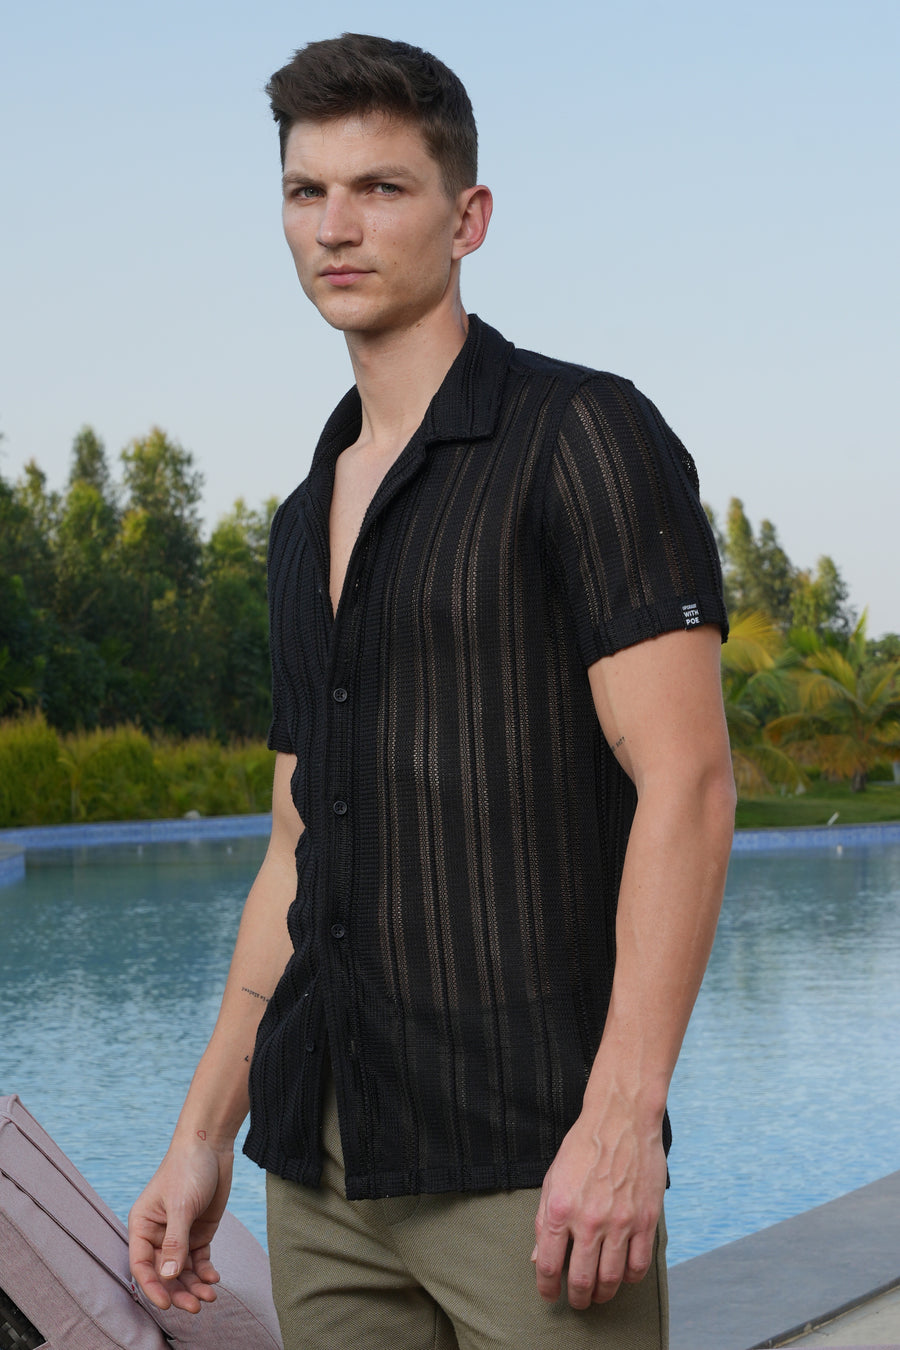 Adrian - Crotchet Shirt - Black